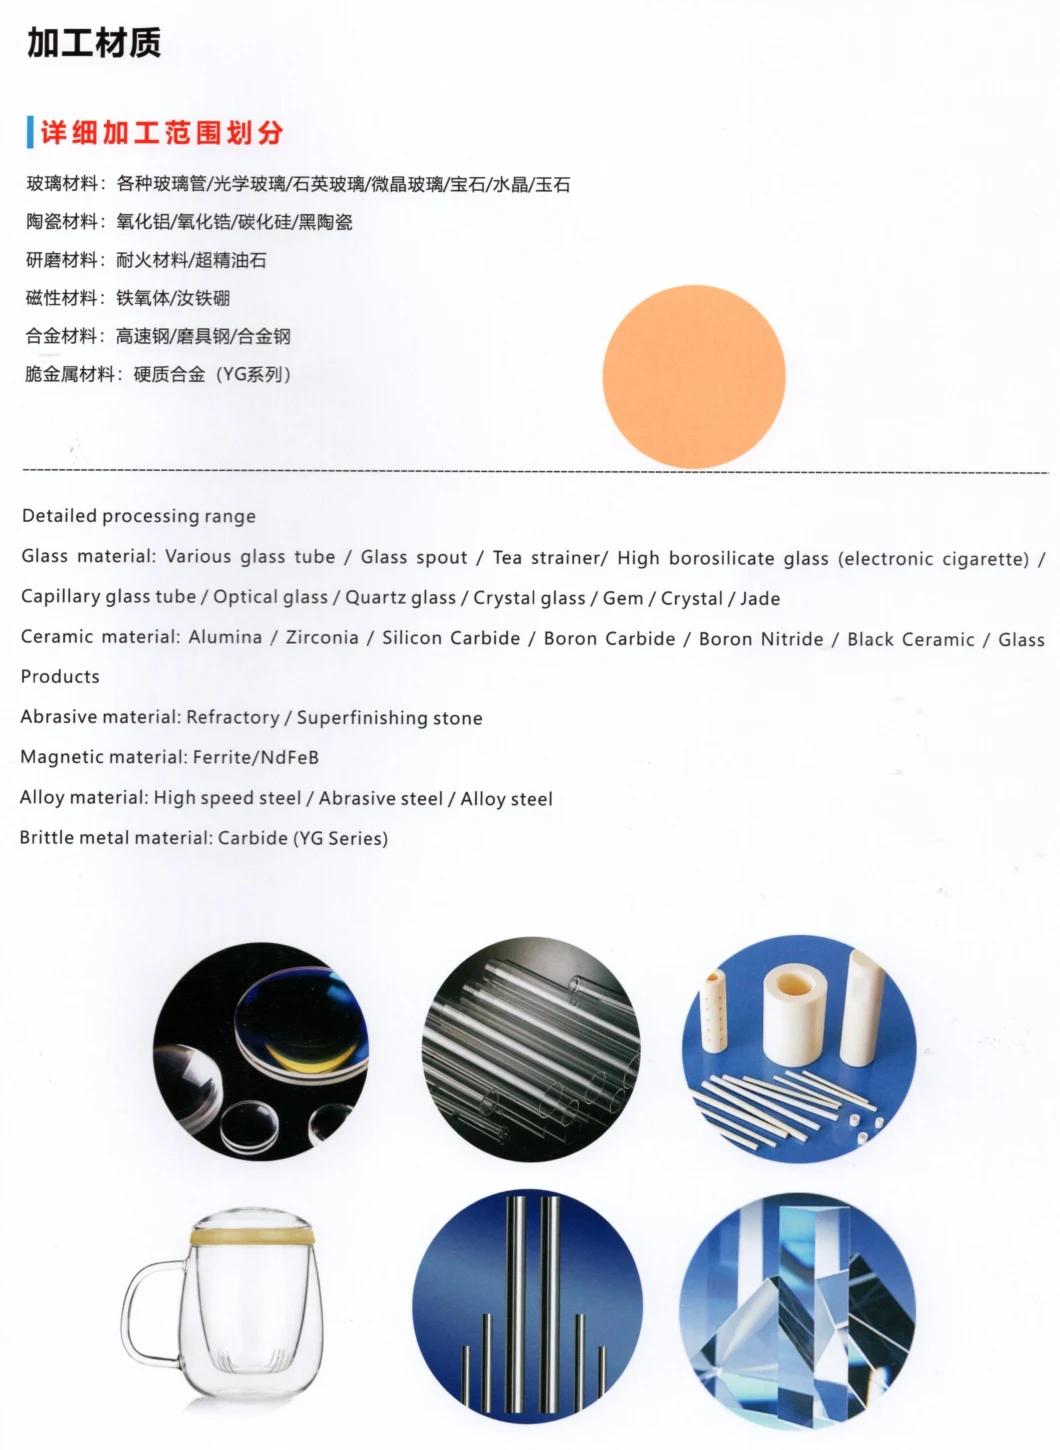 Resin Bonded Diamond Cutting Disc for Quartz and High Borosilicate Glass Tube Processing